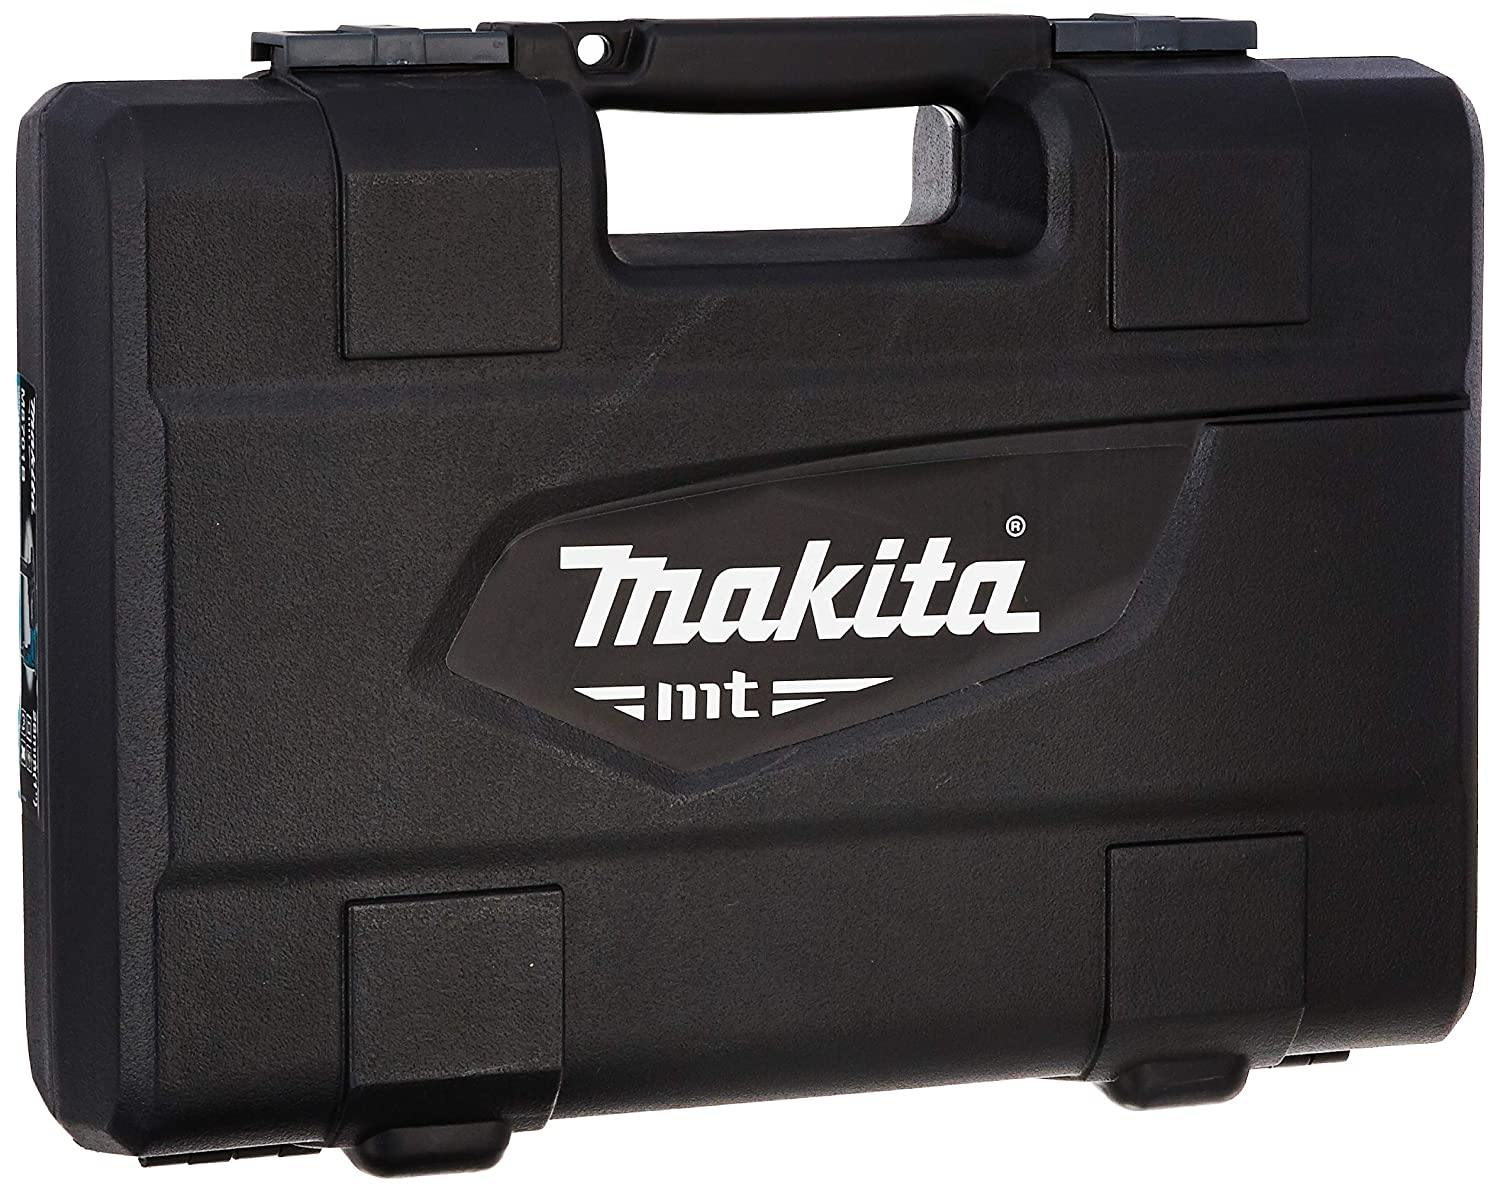 Makita MT Series Rotary Hammer M8700B Power Tool Services